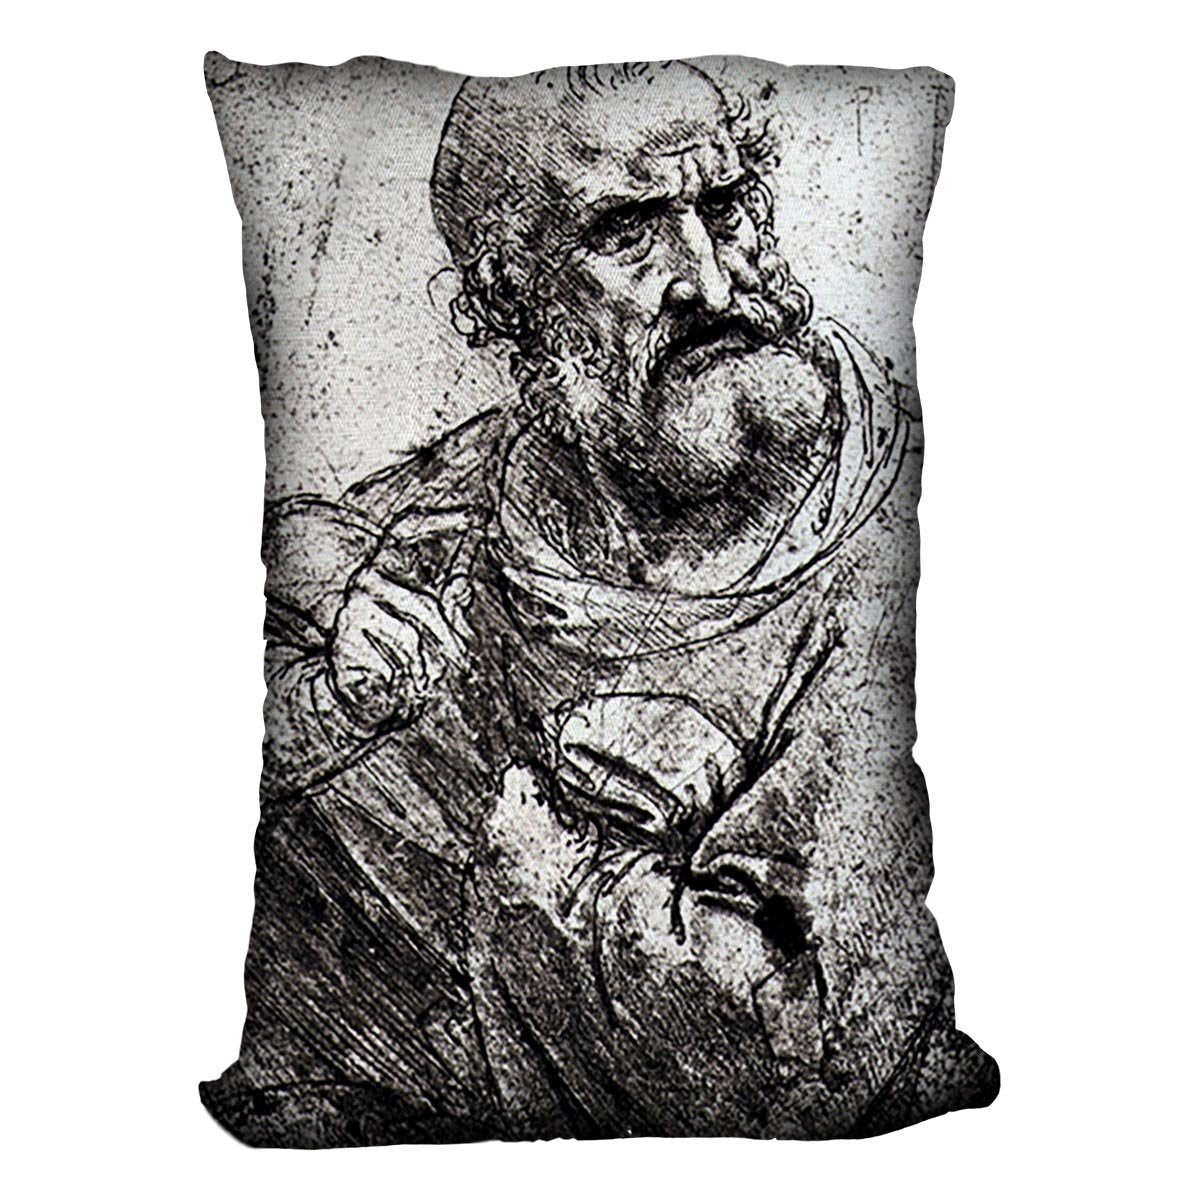 Apostle holy communion by Da Vinci Throw Pillow